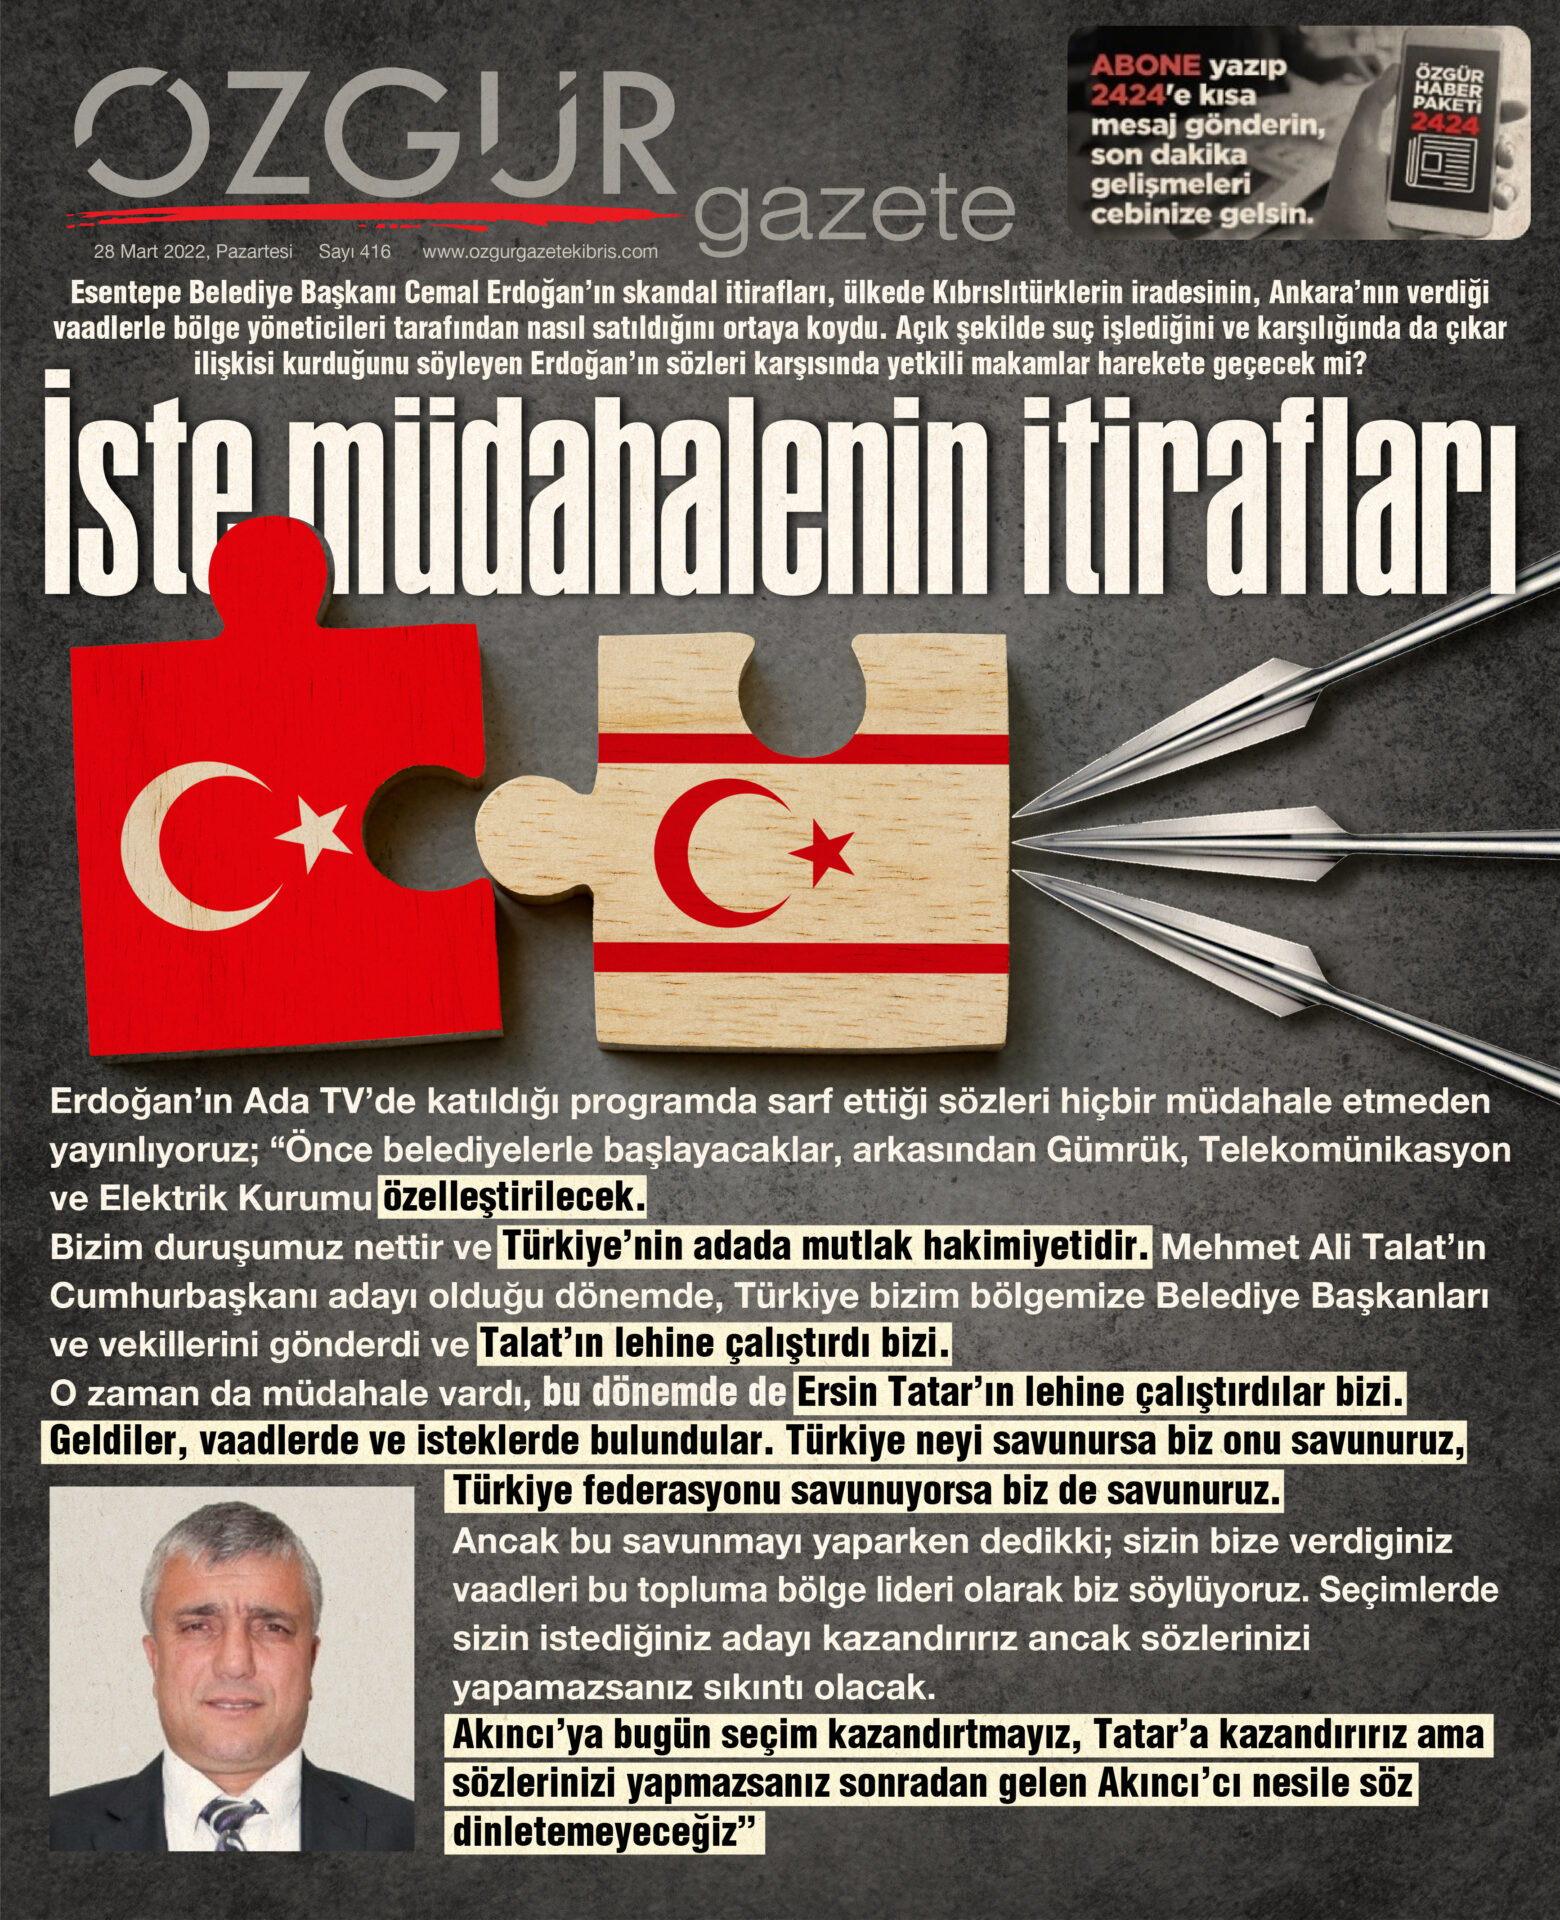 ozgur_gazete_kibris_cemal_erdogan_esentepe_beldiye_baskani_mudahalenin_itiraflari